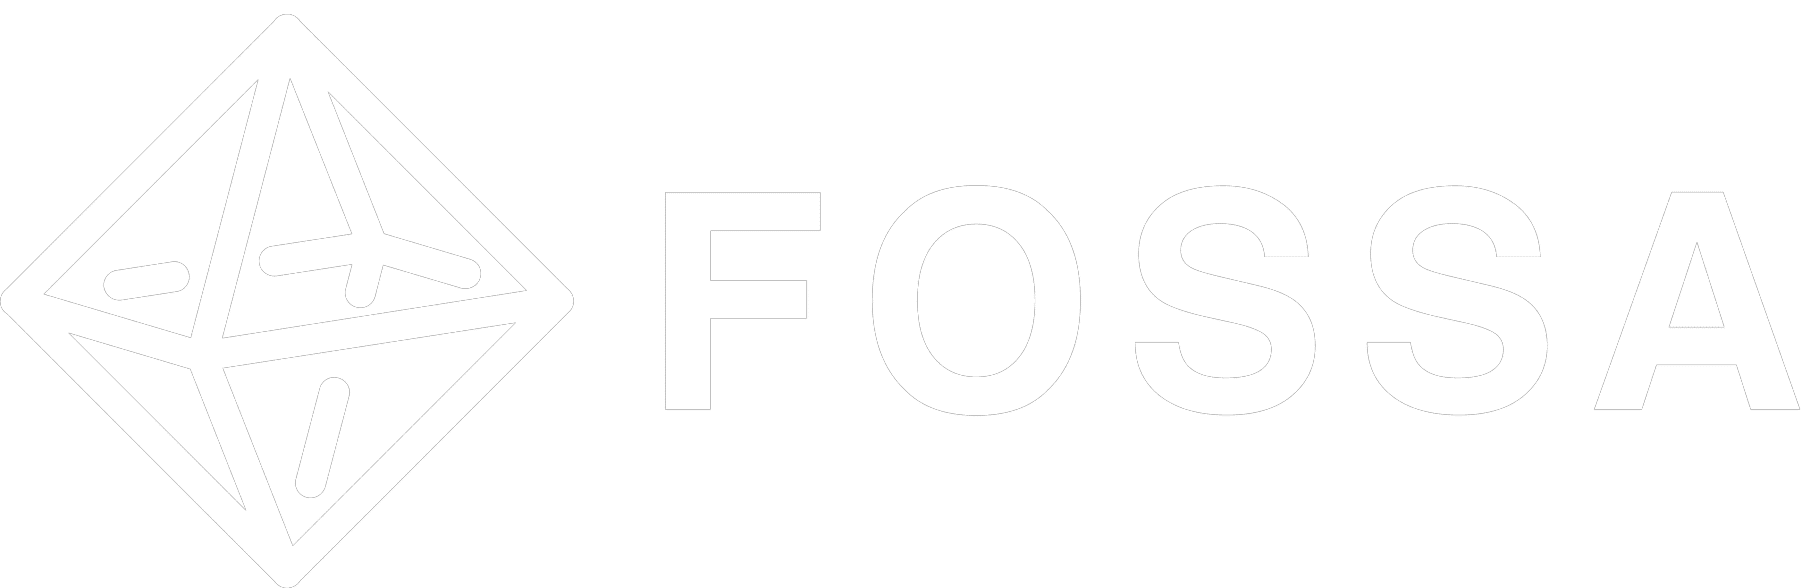 Fossa logo